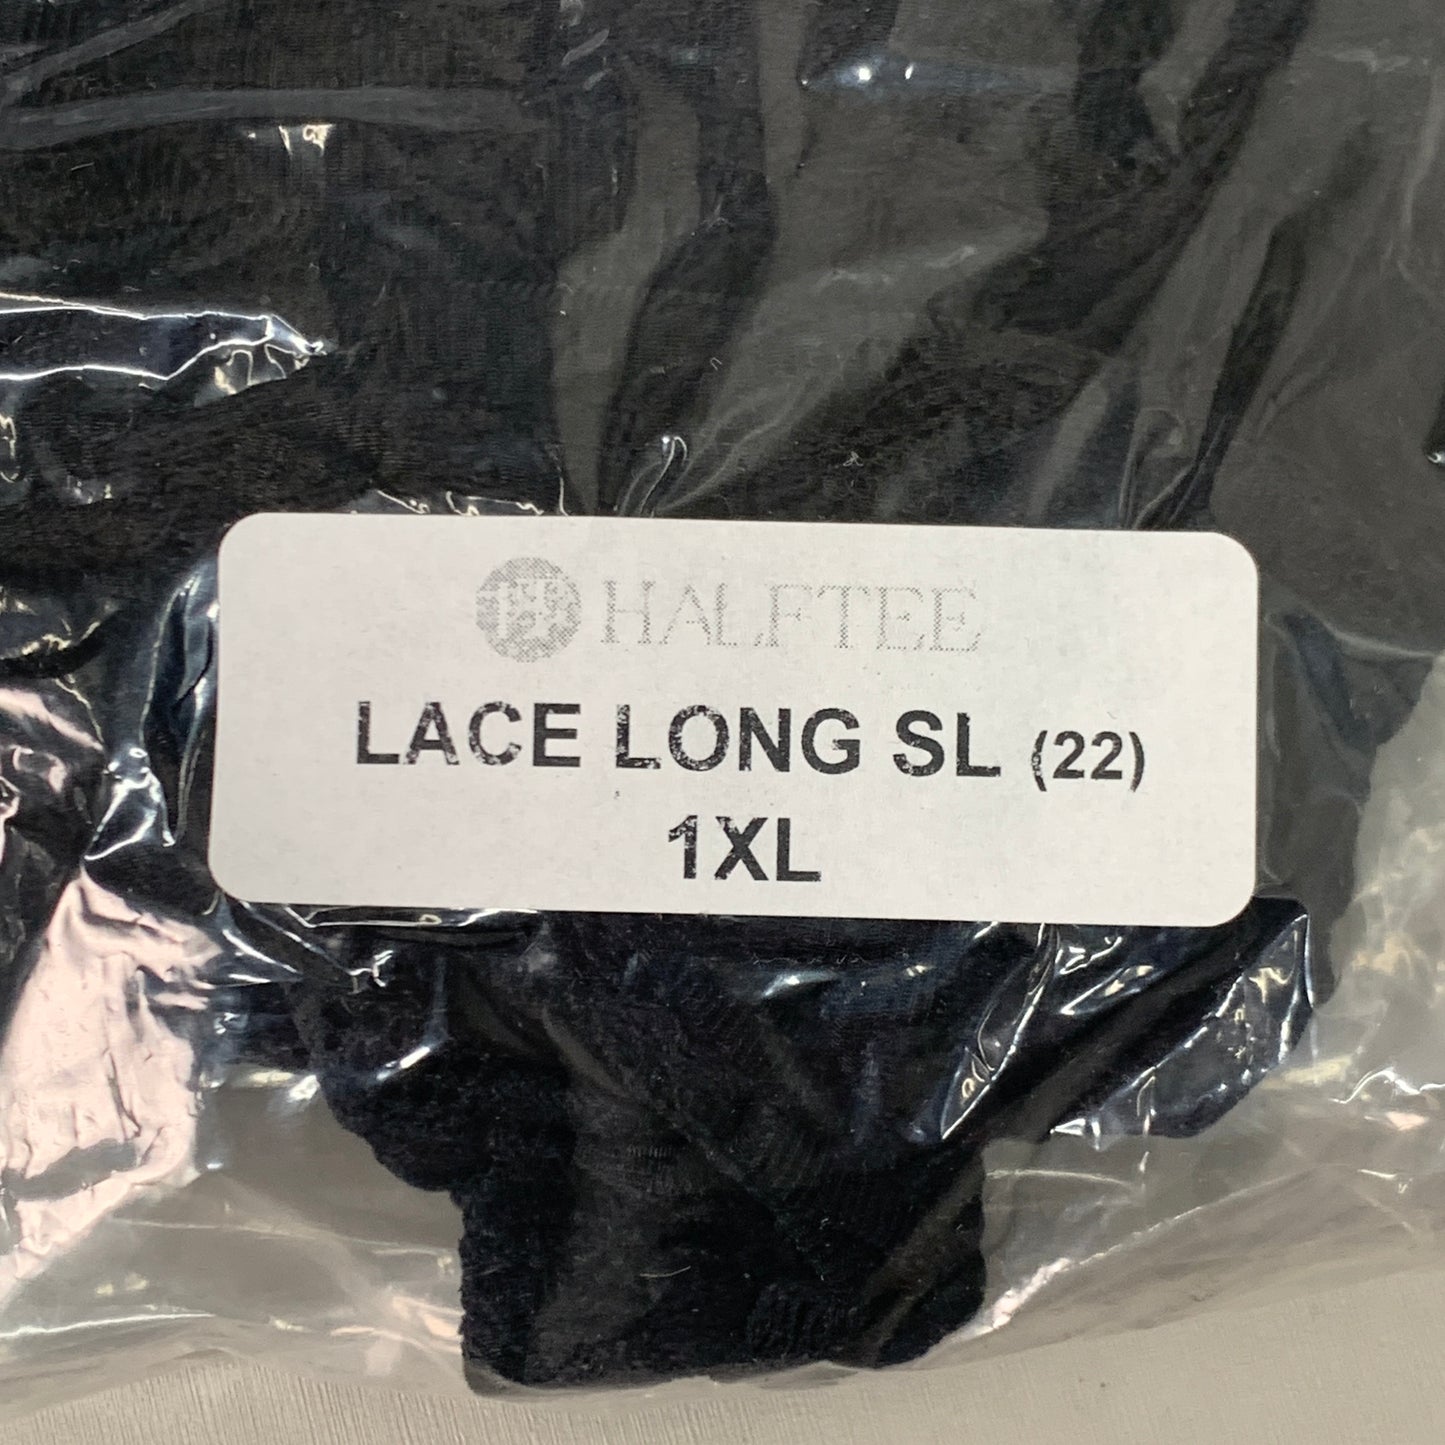 HALFTEE Full Lace Long Sleeve Nylon & Spandex Blend Floral Black 1XL (22)